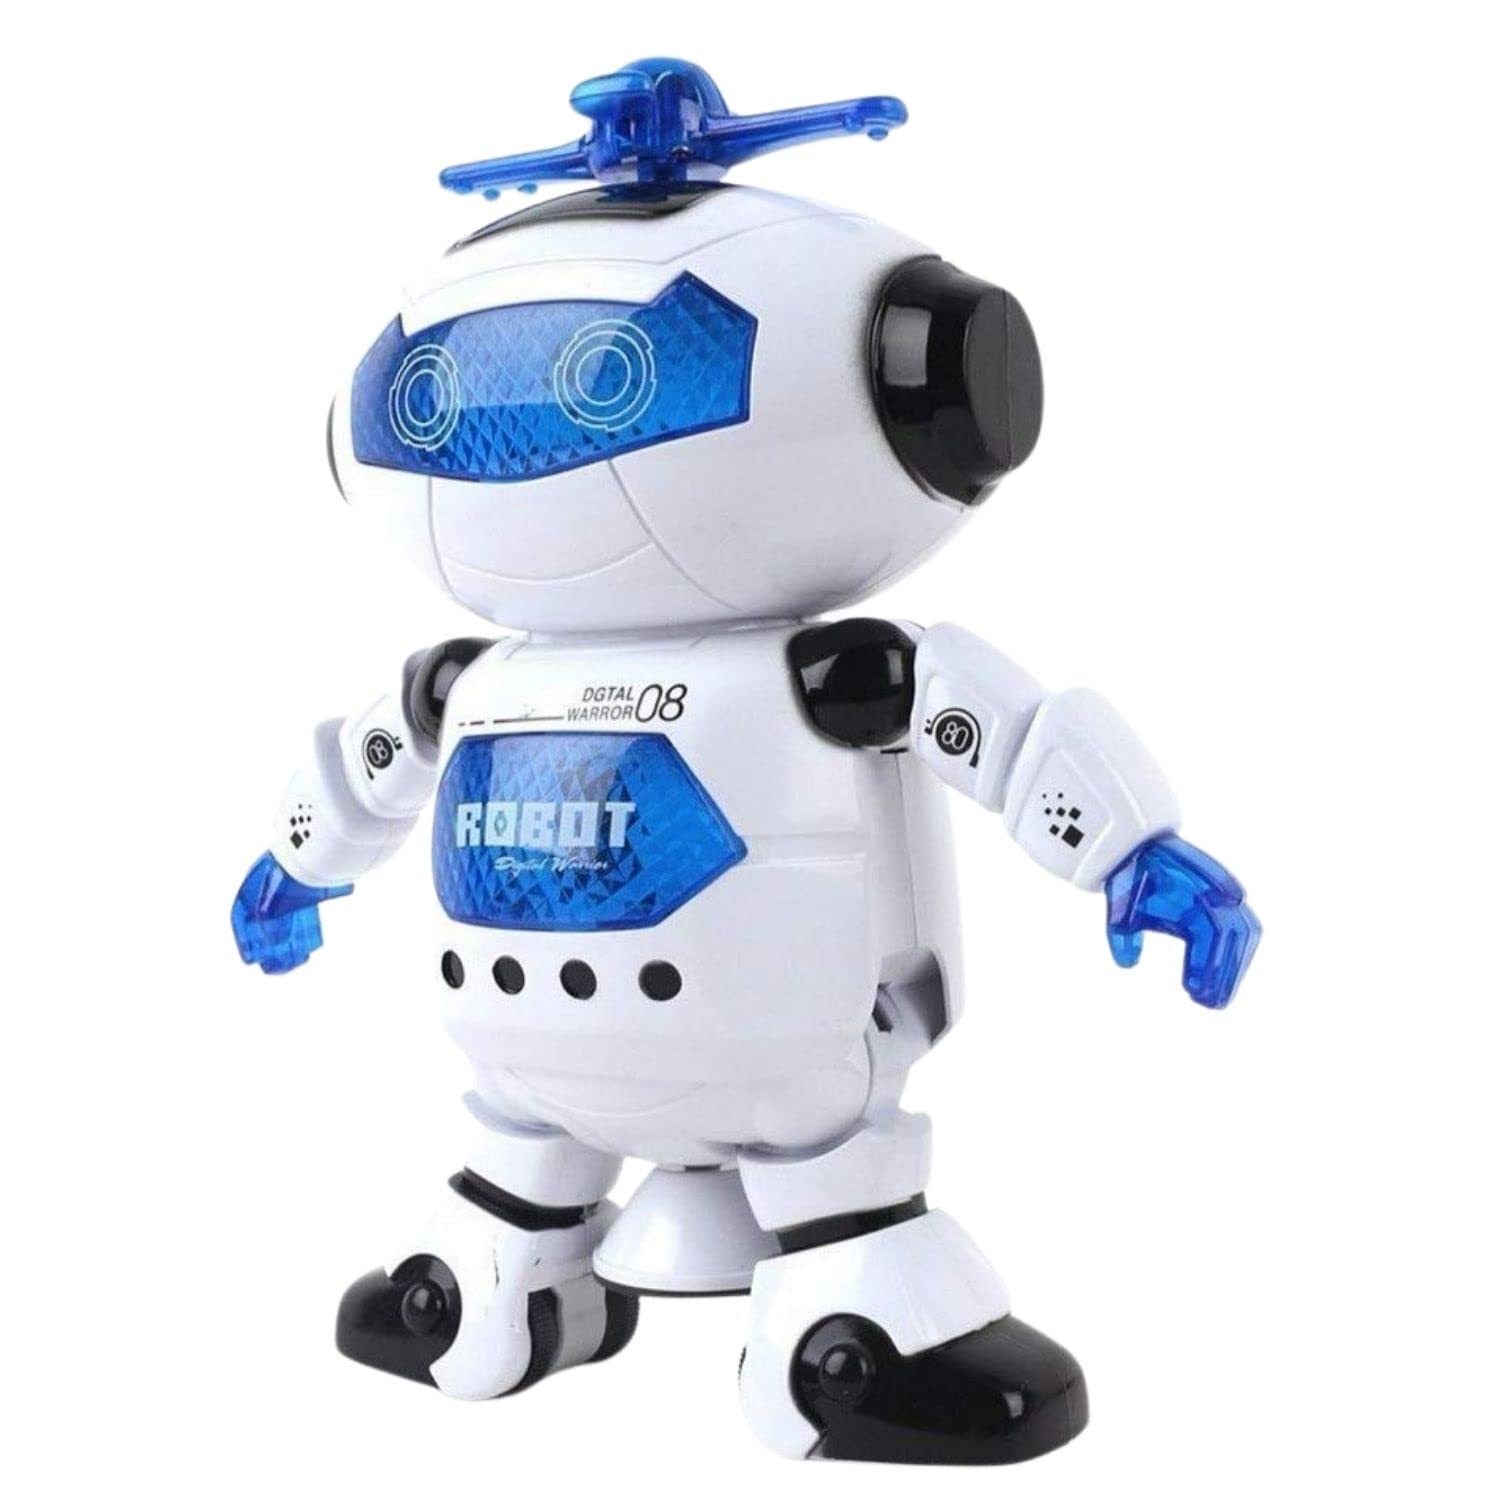 Kids Mandi amazing toy robot with music, lights, and movements.